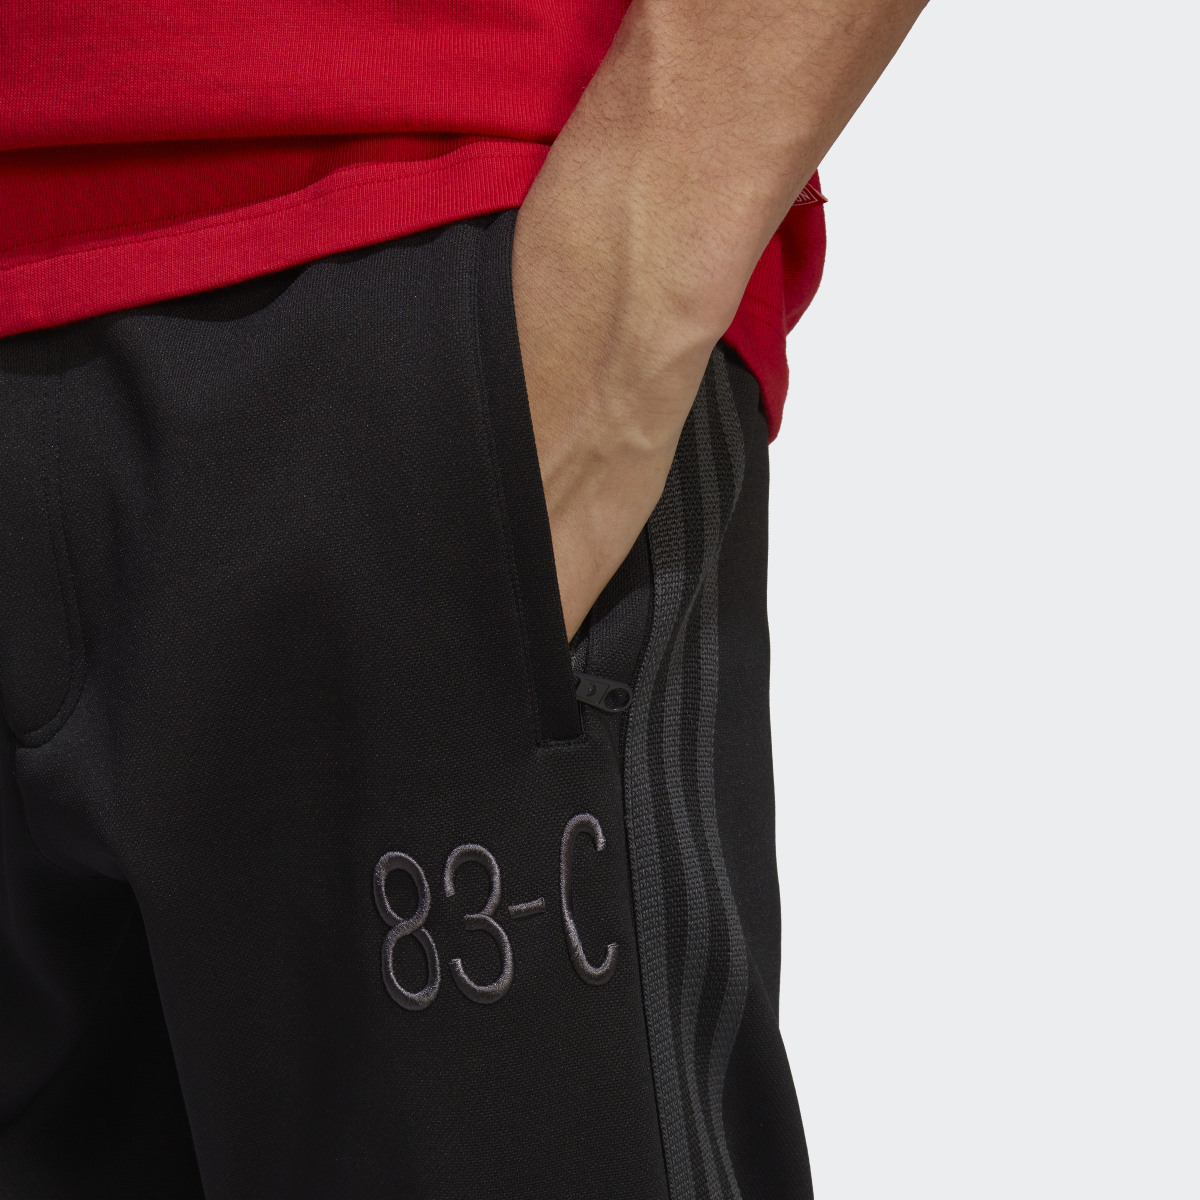 Adidas 83-C Track Pants. 5